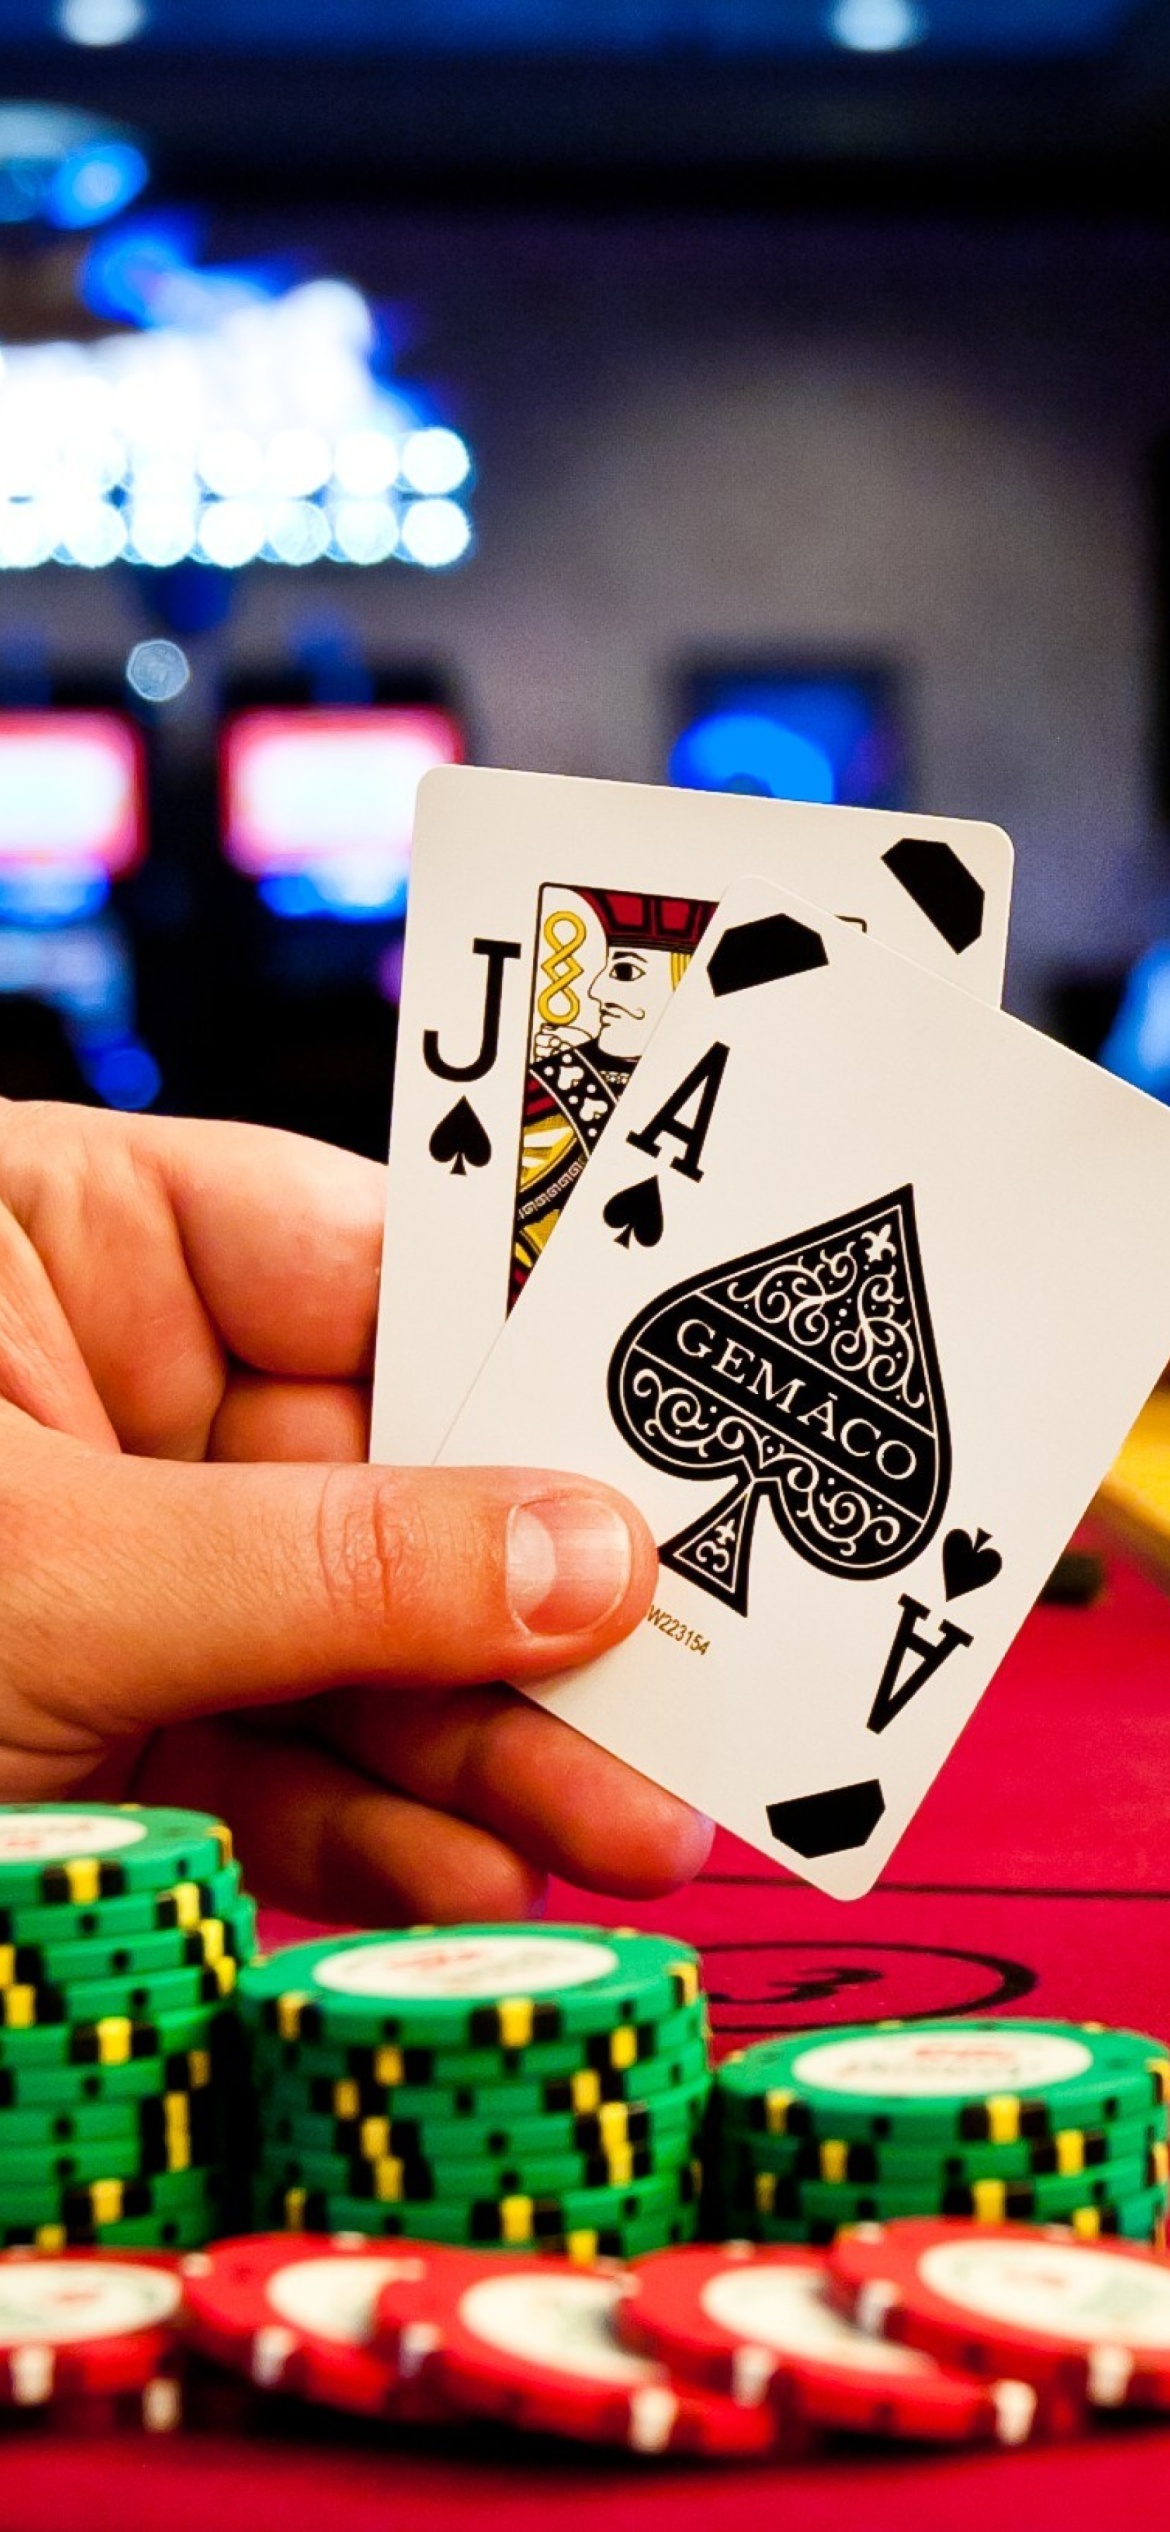 Play blackjack in Casino screenshot #1 1170x2532